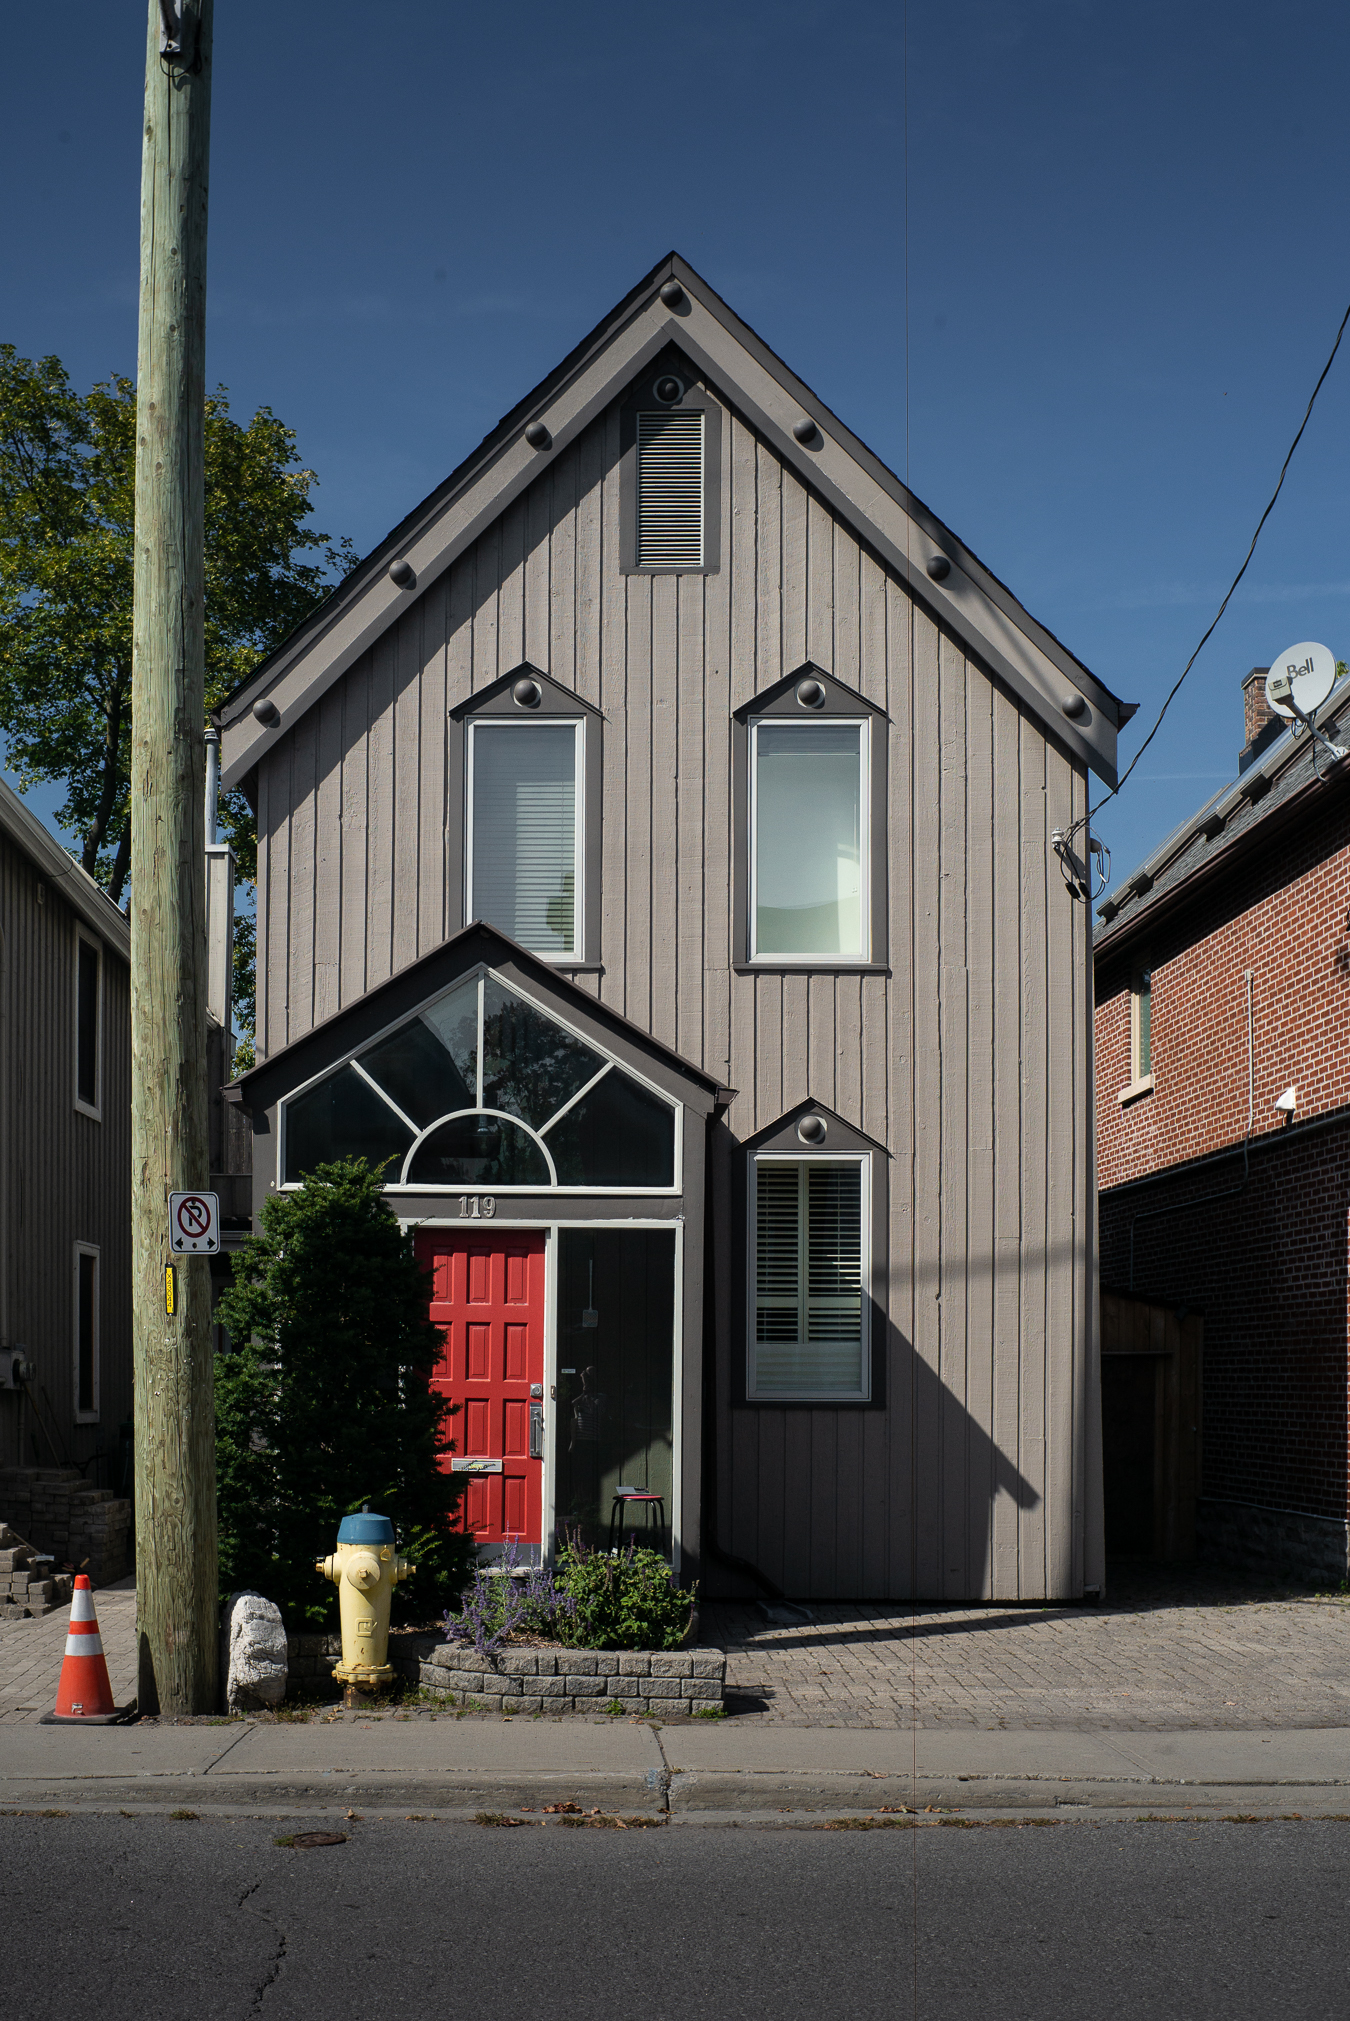 sweet house that's been tastefully upkept - Ottawa, Ontario